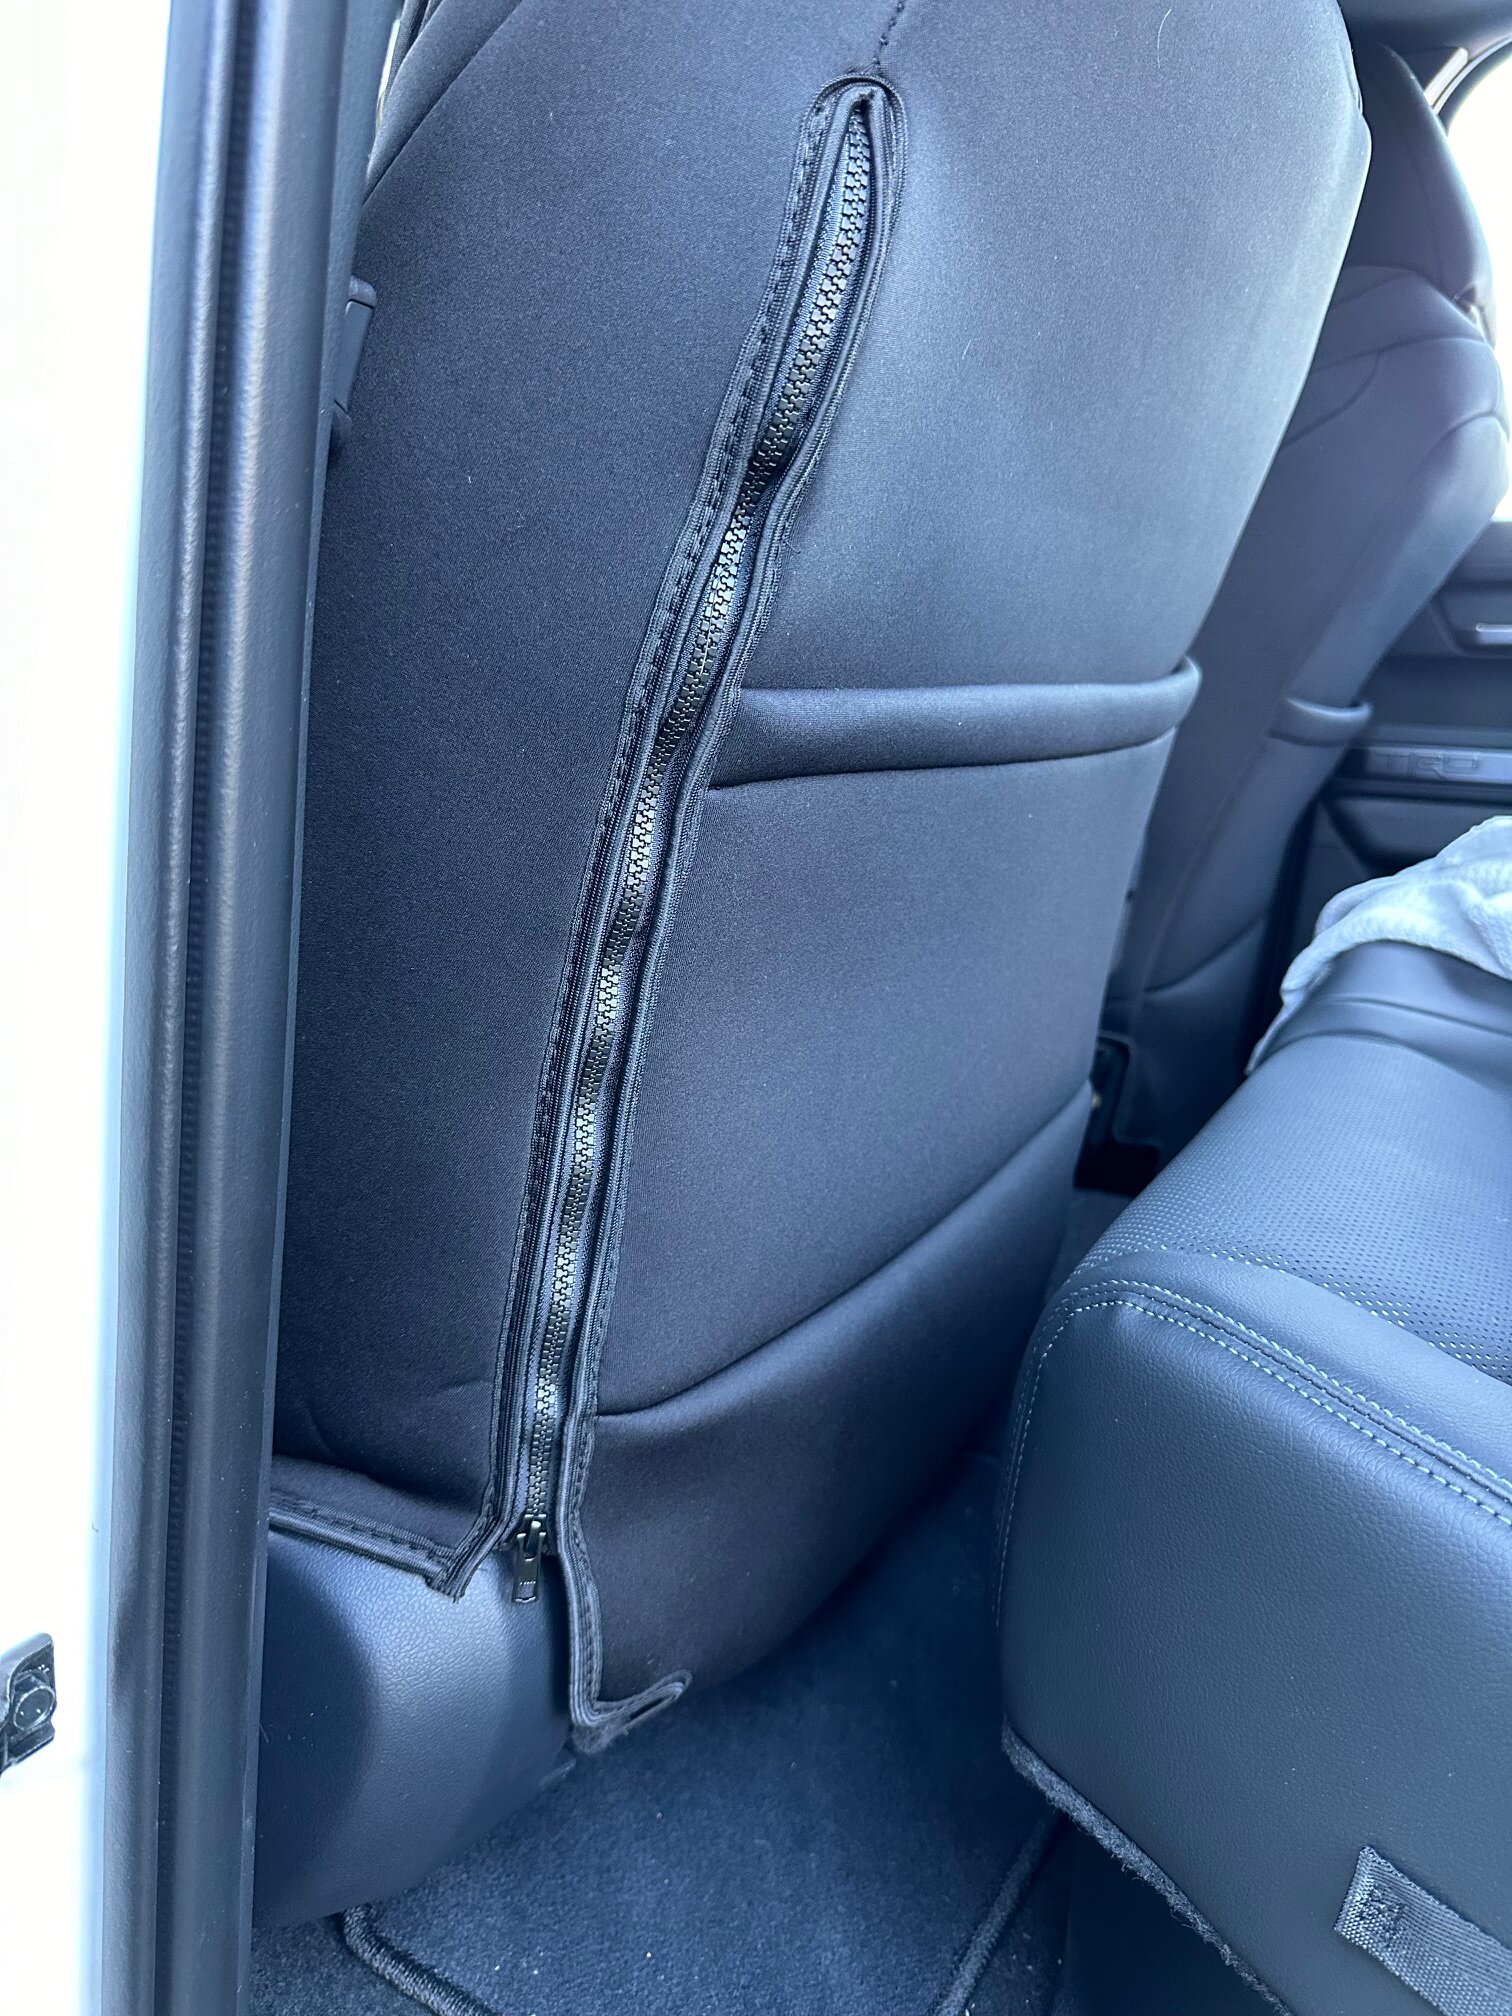 2024 Tacoma Coverking custom neoprene seat cover review IMG_9165